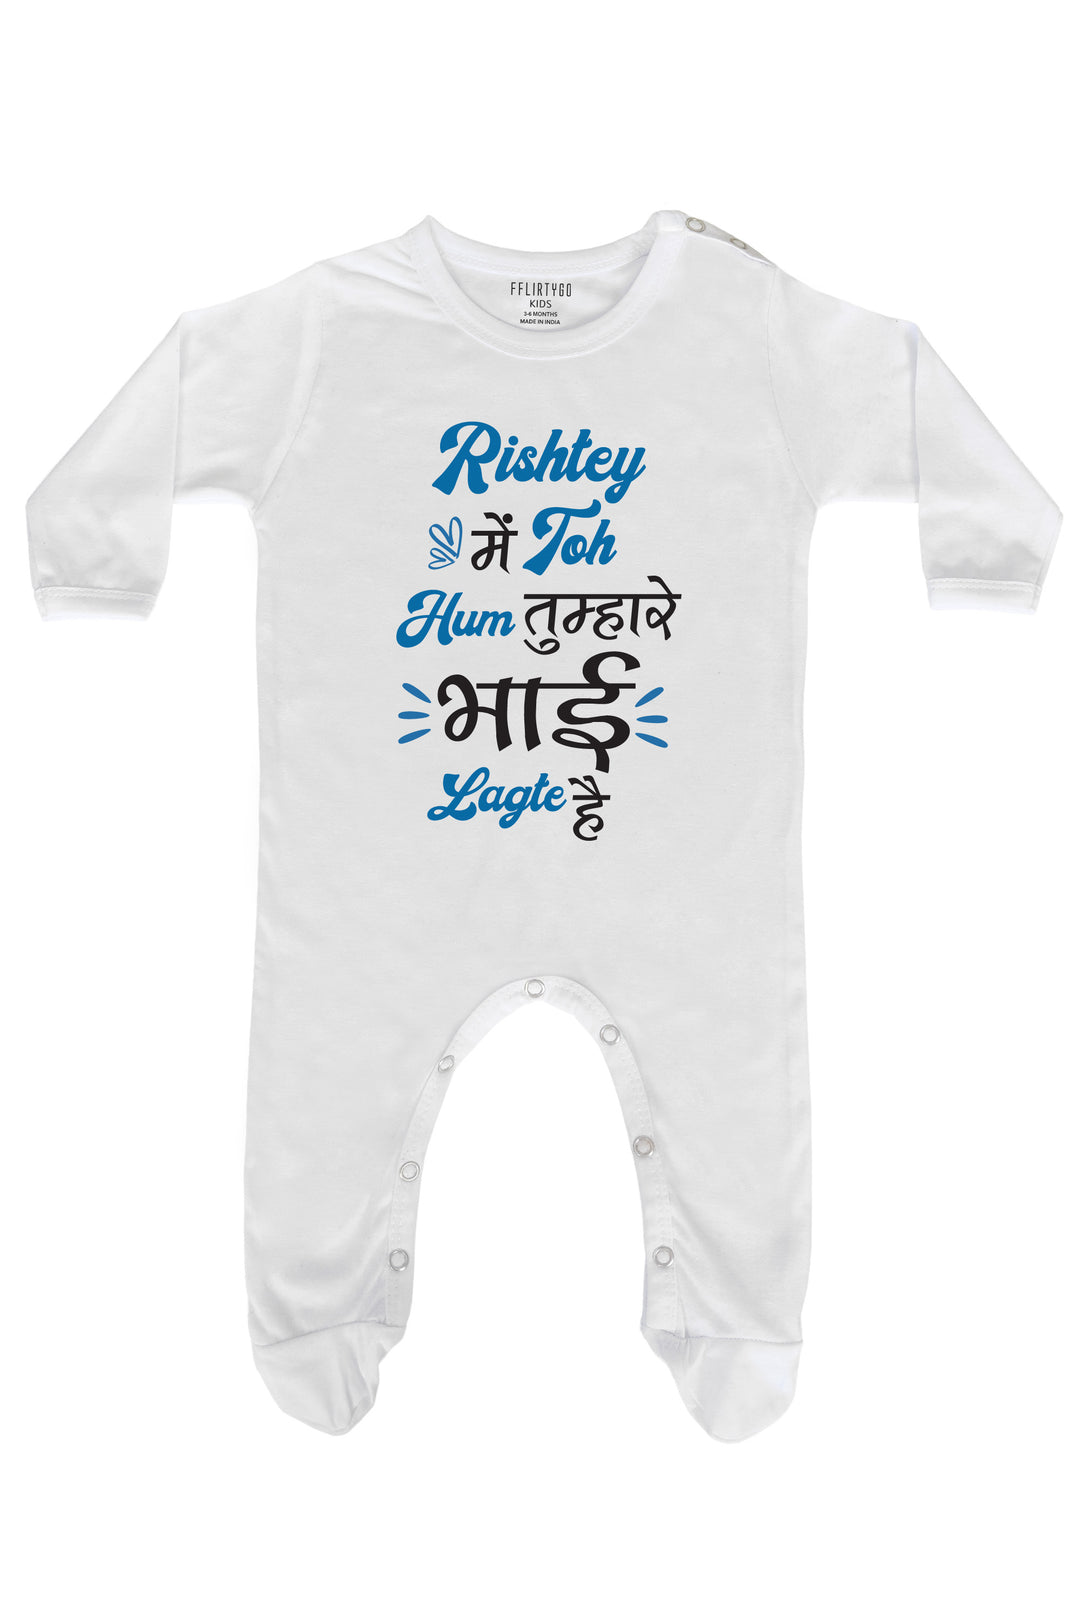 Rishtey Mai Toh Hum Tumharey Bhai Lagte Hai Baby Romper | Onesies